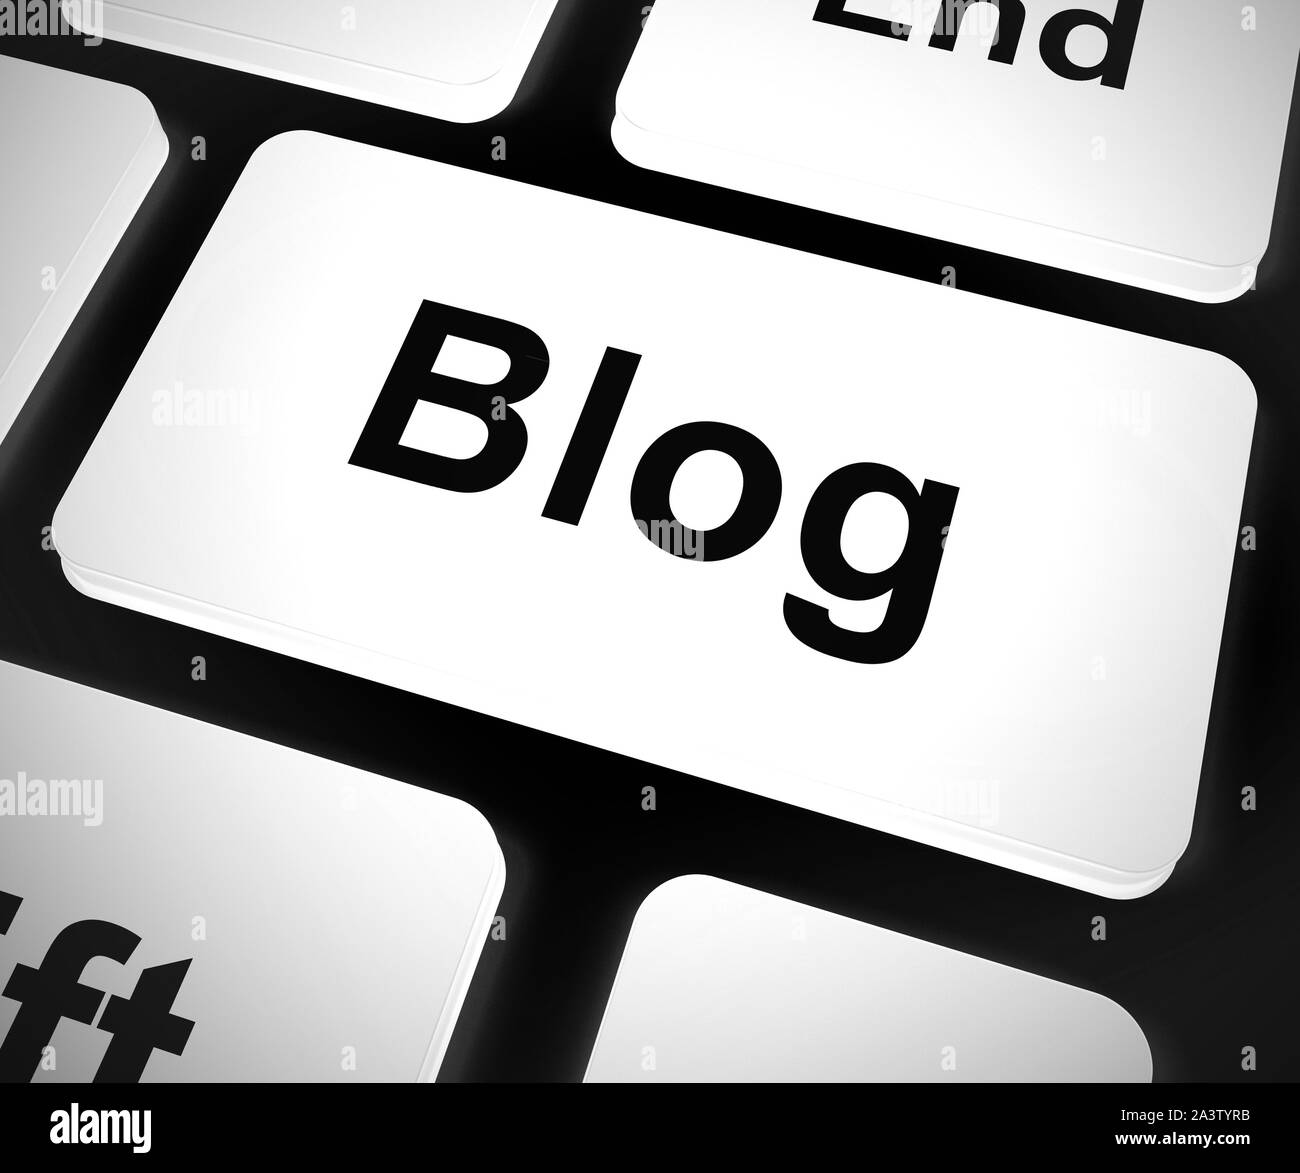 Blog or blogging website icon showing online journals and writing. Weblog journalism for information and help - 3d illustration Stock Photo